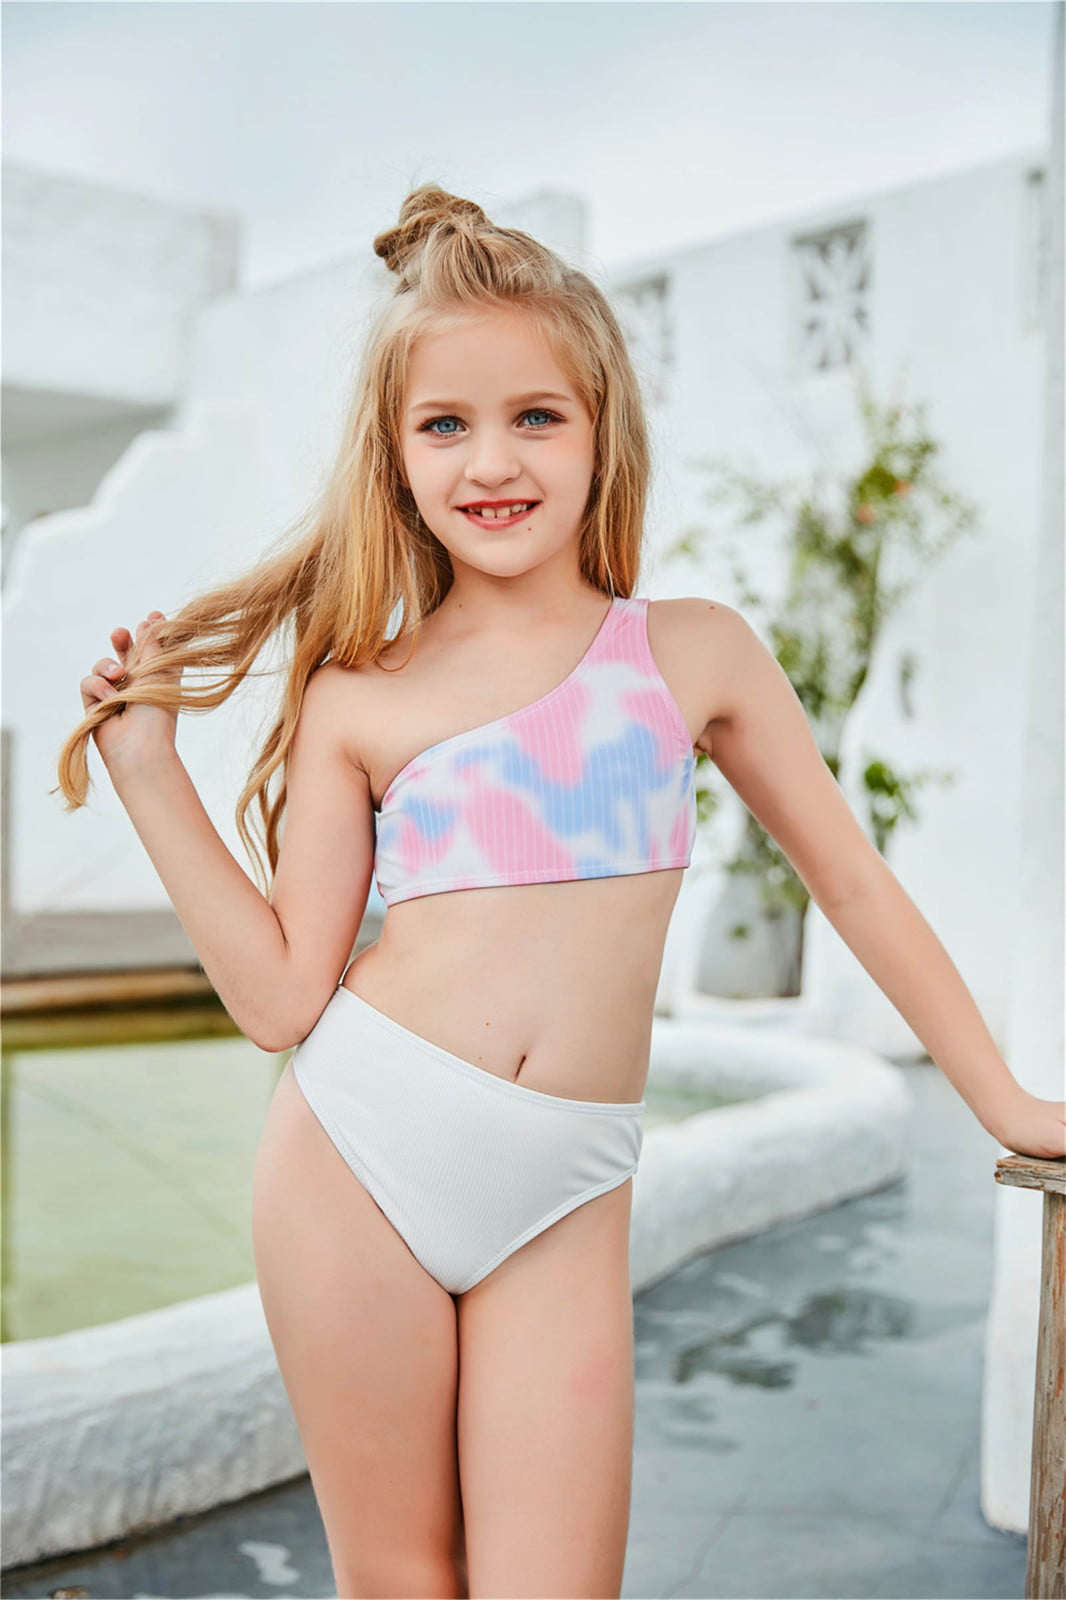 CHGBMOK Summer Girls Holiday Casual Gradient Color Cute Solid Bikini  Swimwear 